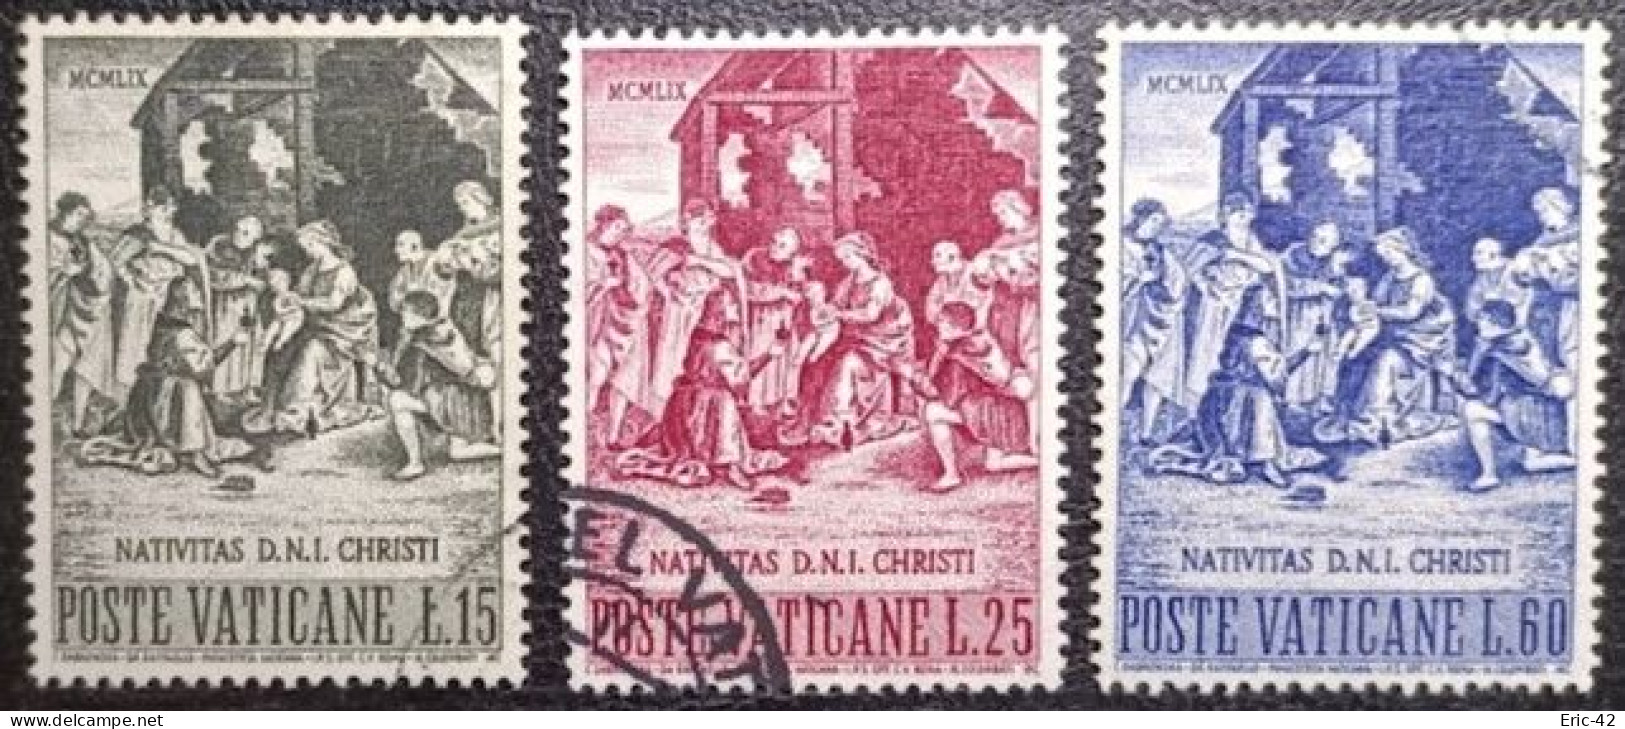 VATICAN. Y&T N°284-286. USED. - Used Stamps